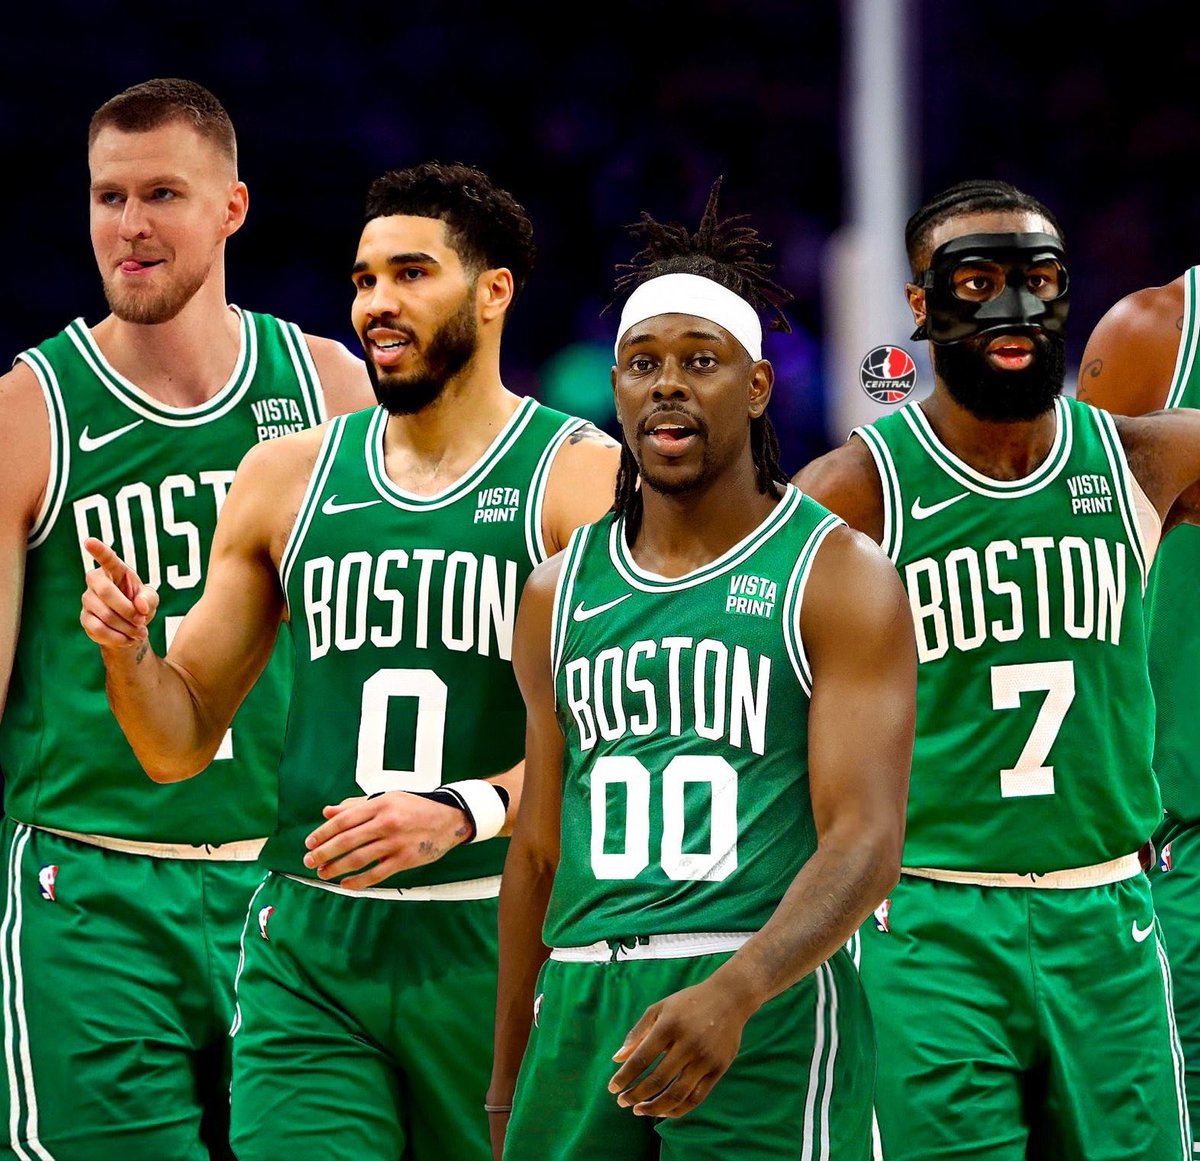 As últimas 8 temporadas do Boston Celtics

2017 - Final de conferência 
2018 - Final de conferência
2020 - Final de conferência 
2022- Finais da NBA
2023 -Final de conferência 
2024 - Final de conferência ⌛️

Constância 🔥🔥